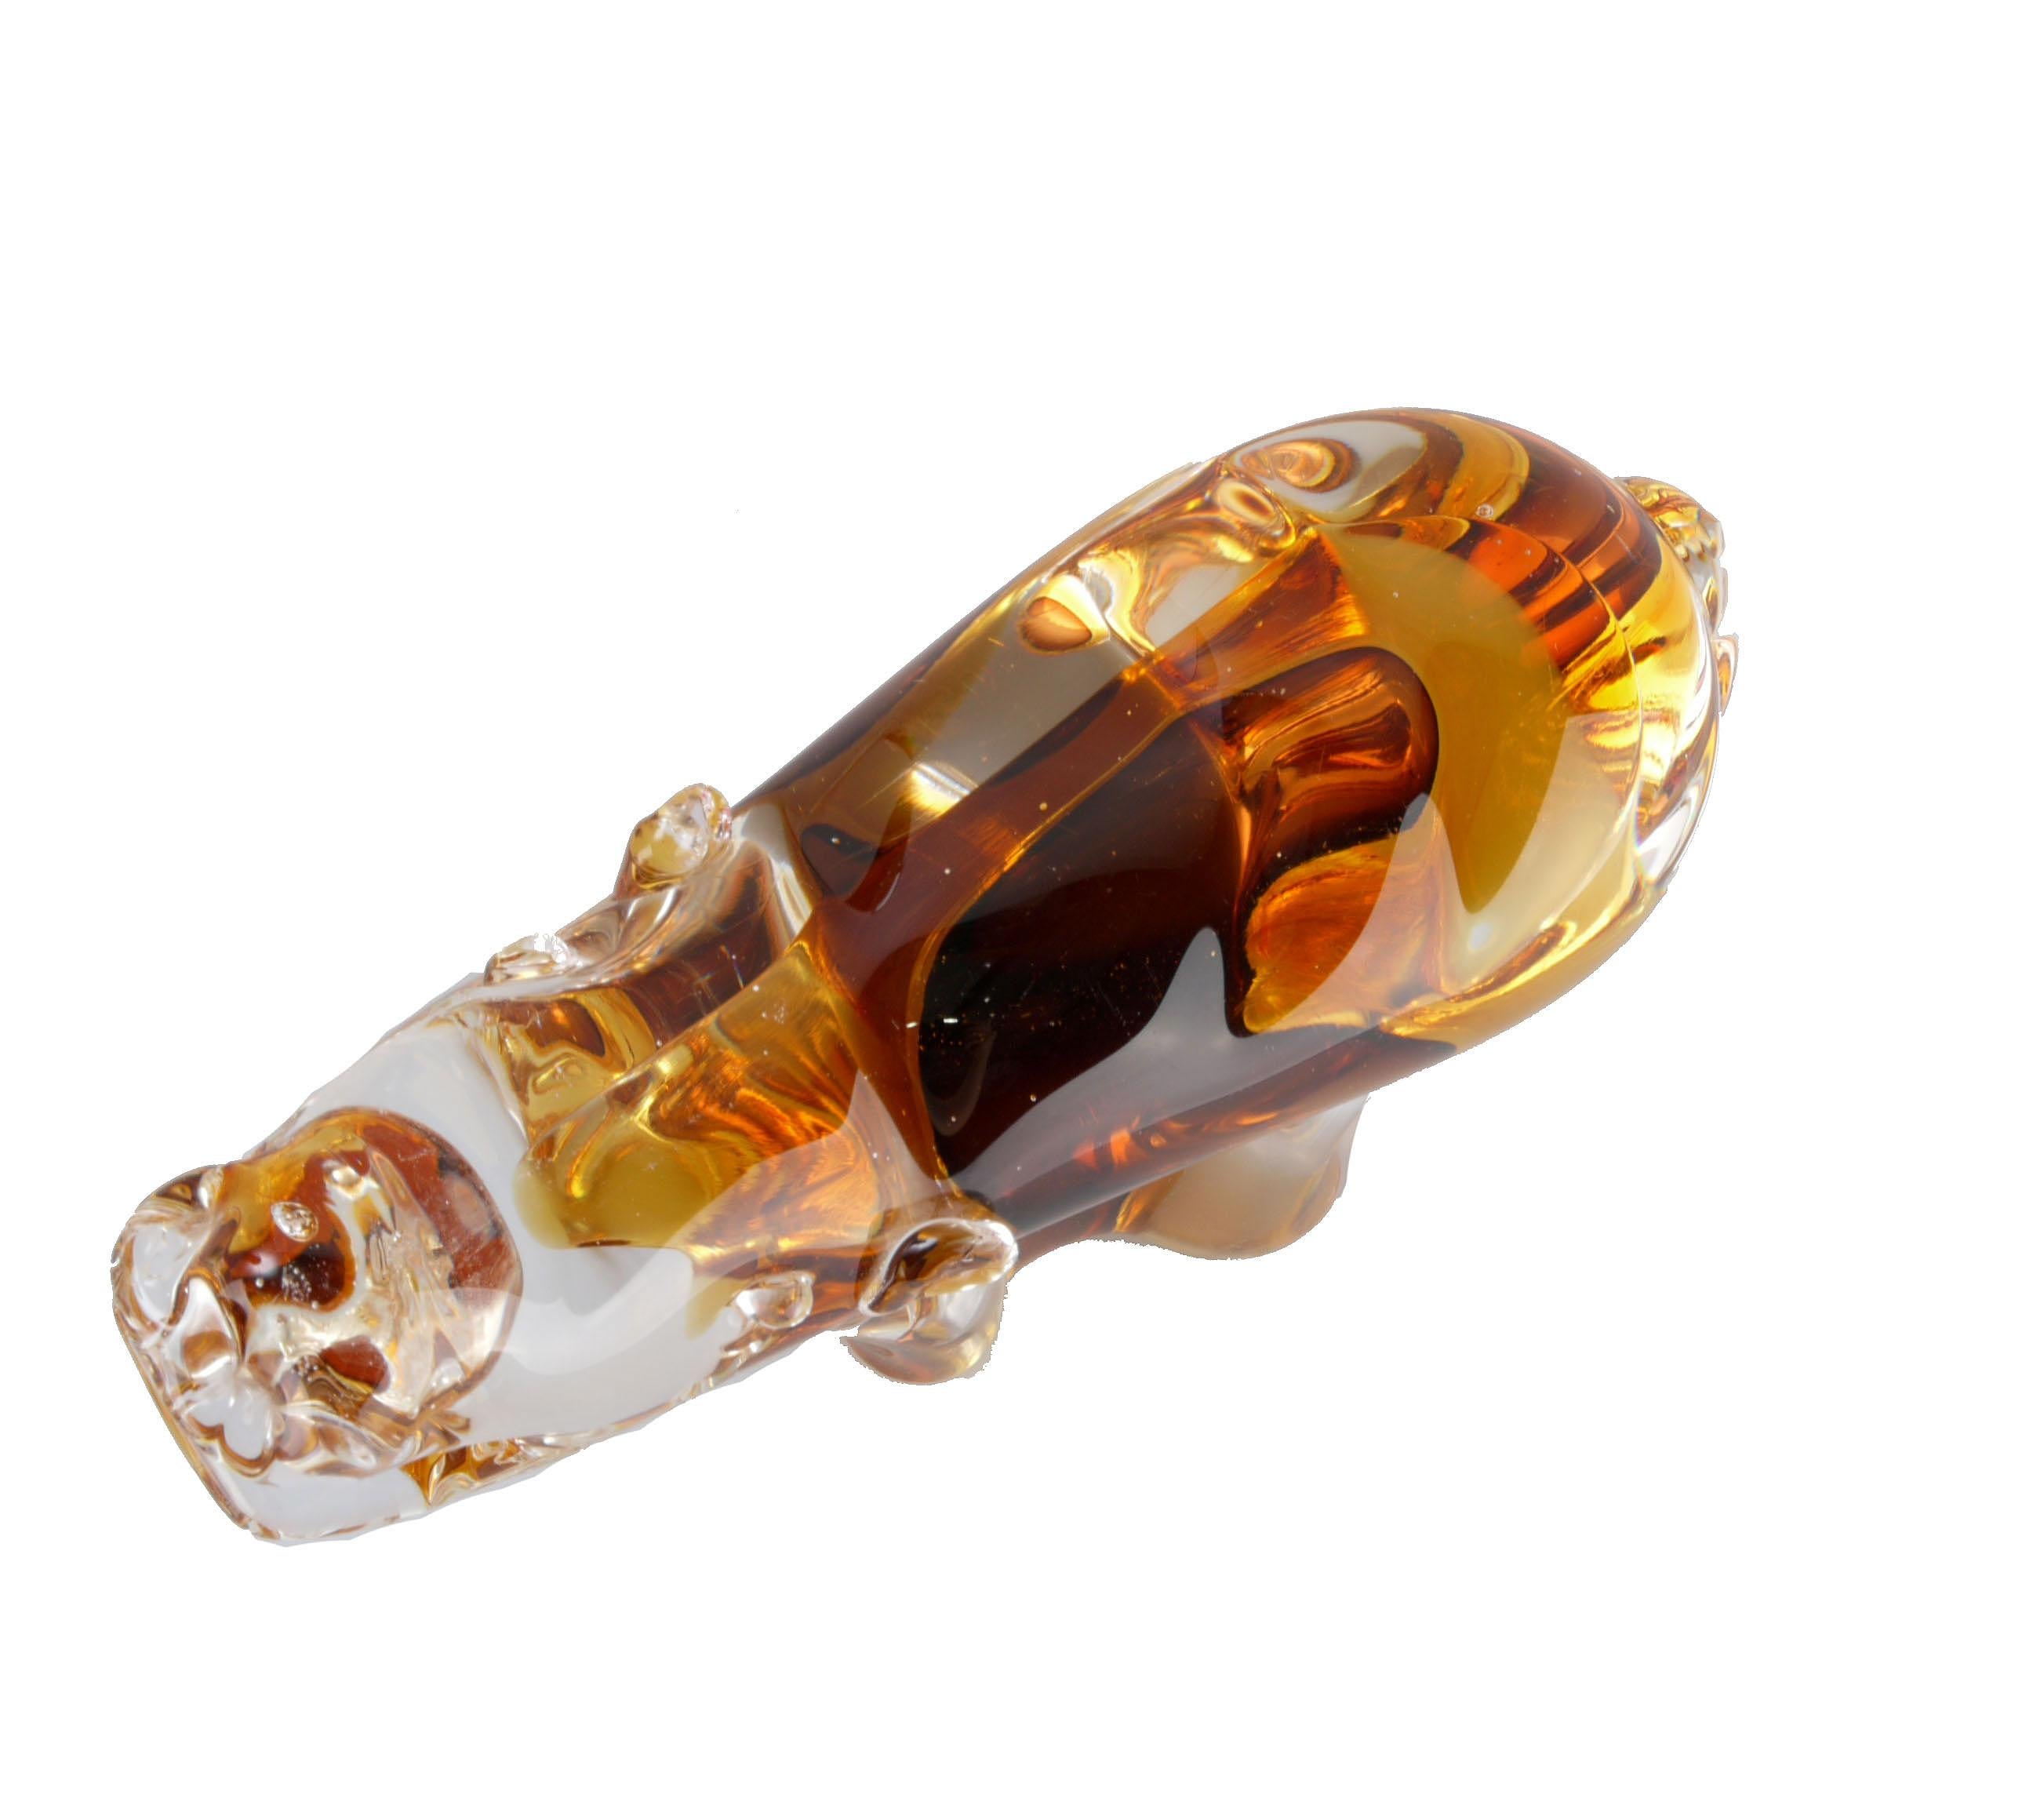 Hand-Crafted Italian Blown Murano Art Glass Hippopotamus in Clear & Amber Glass, River Horse